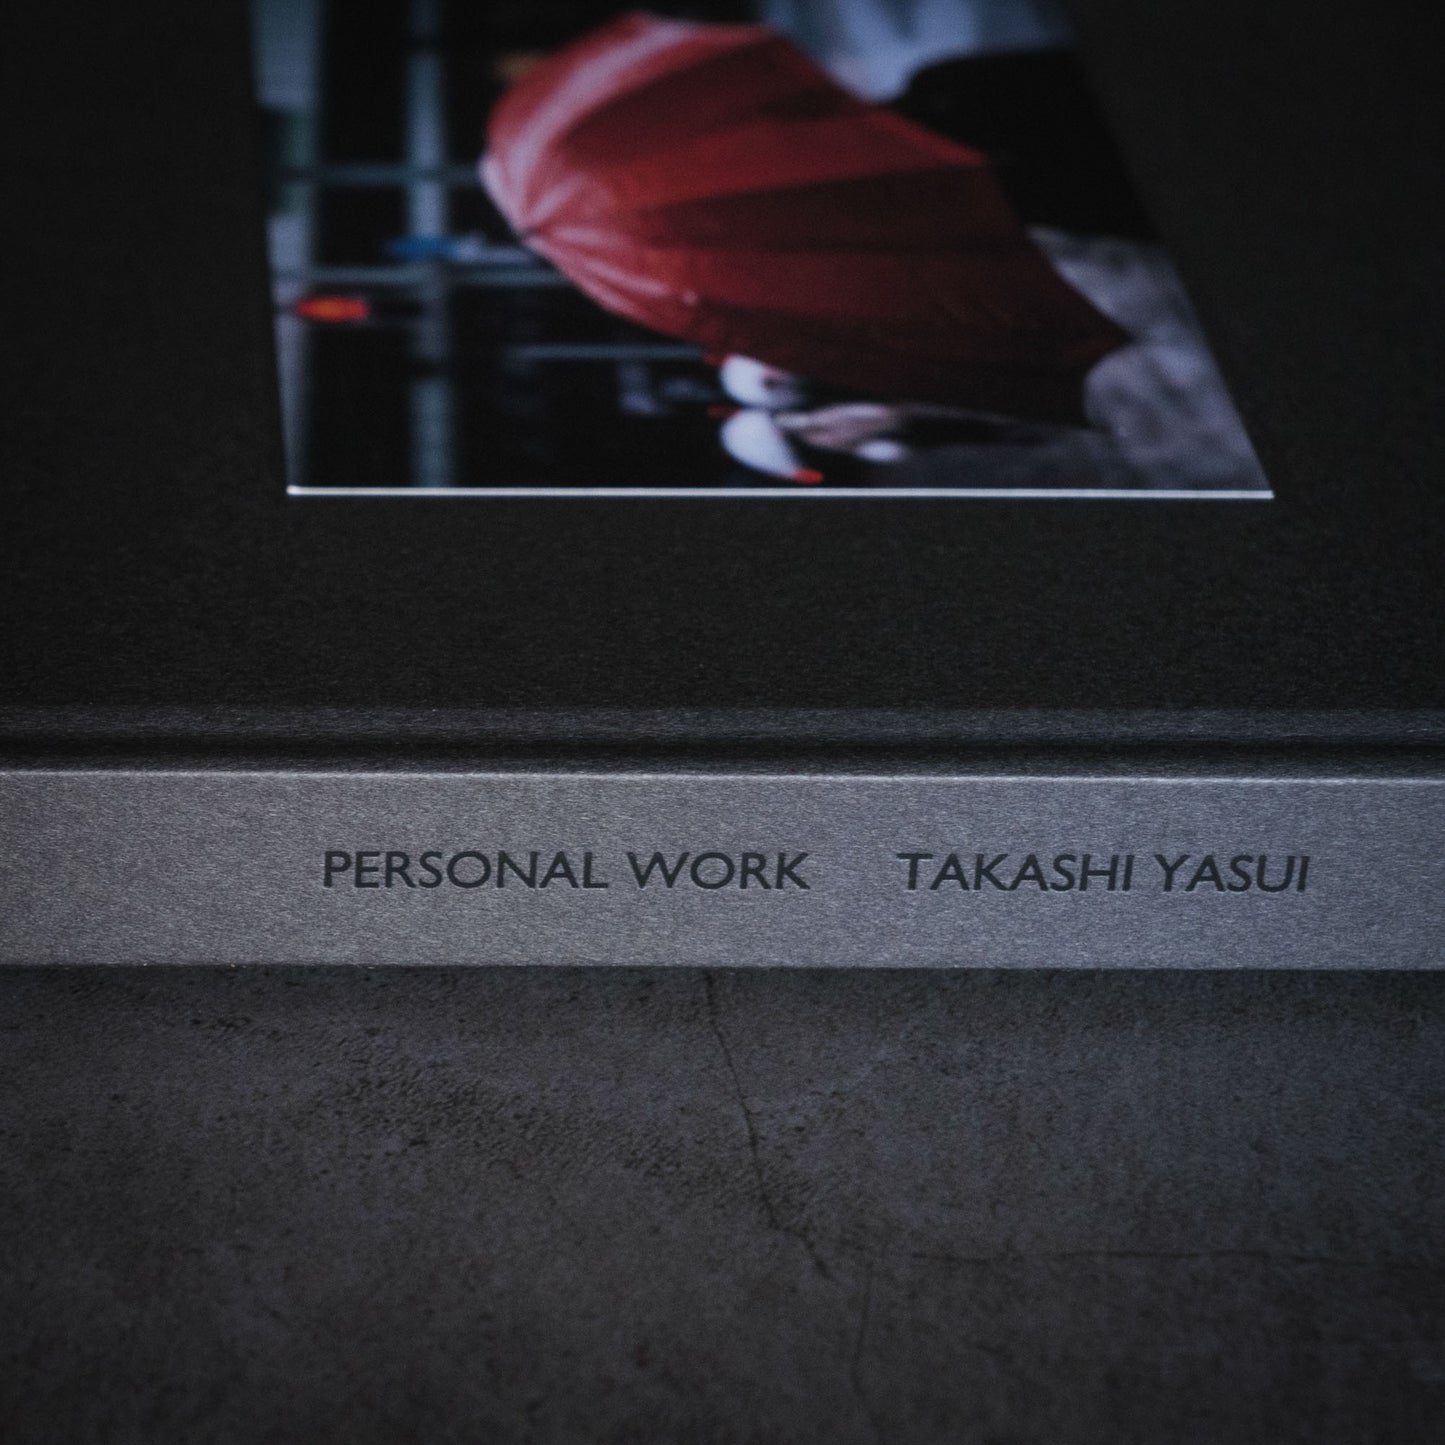 PERSONAL WORK - TAKASHI YASUI